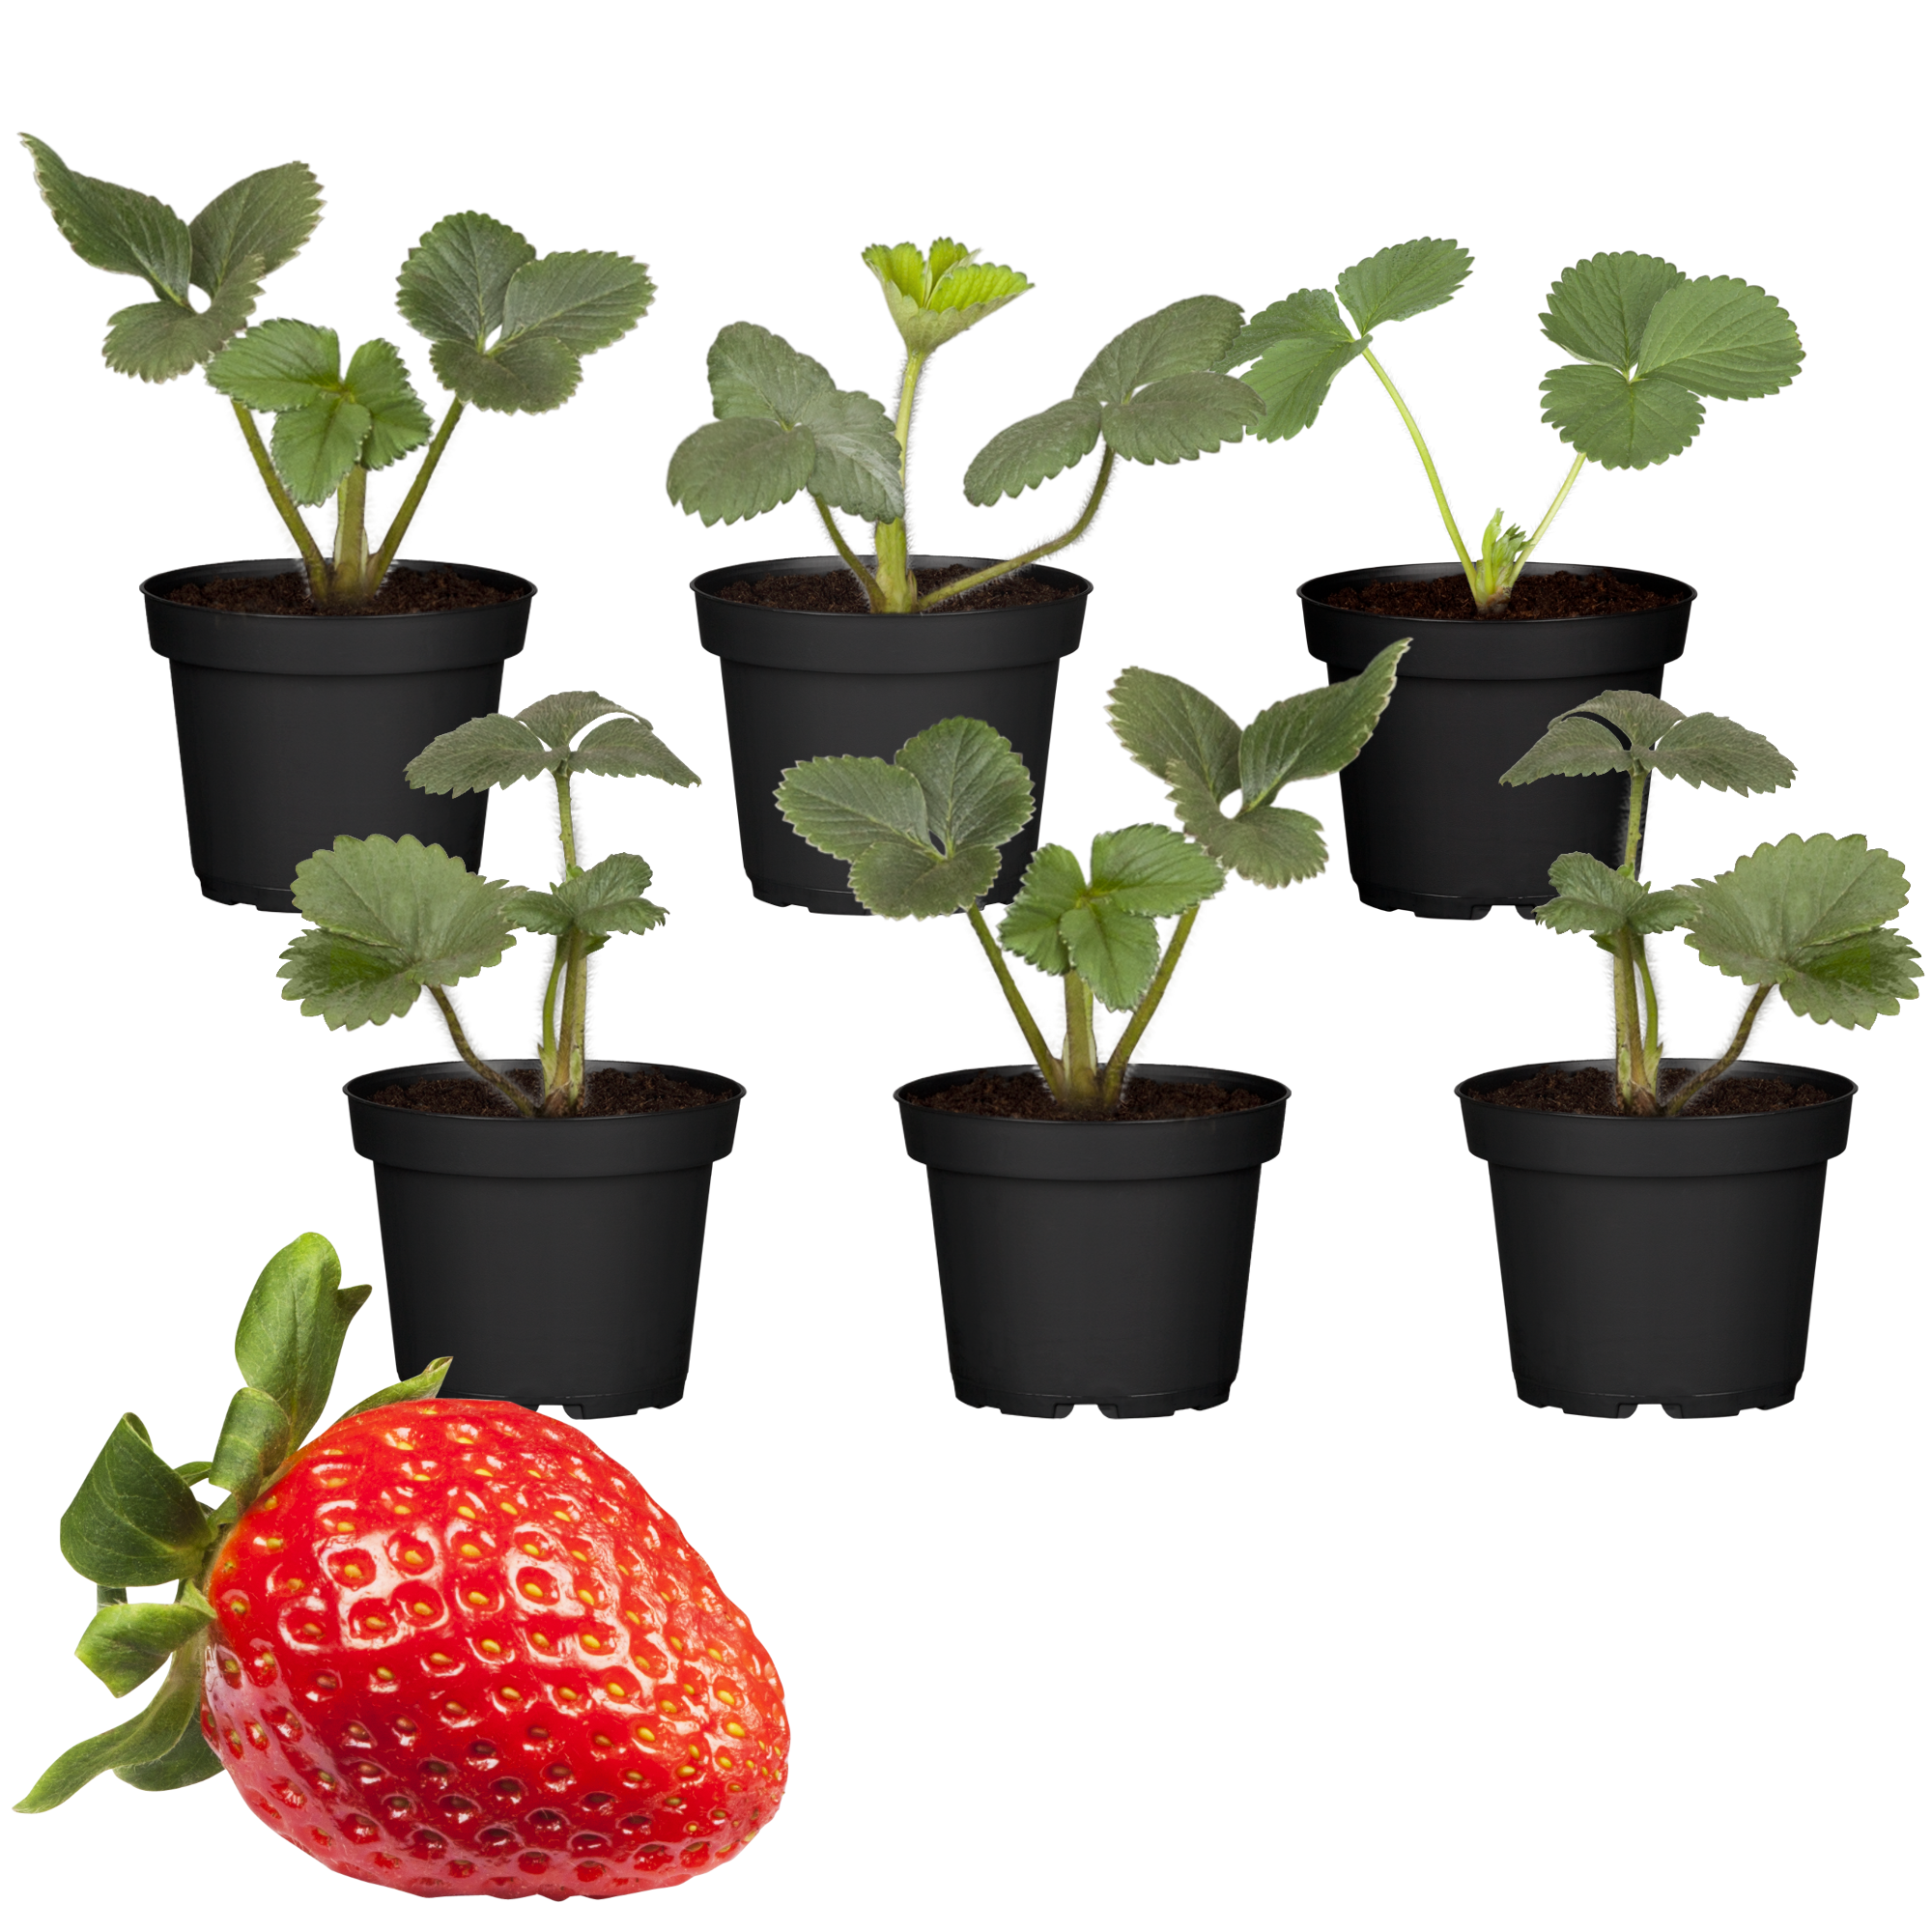 Erdbeere 'Elsanta' 9 cm Topf, 6er-Set + product picture